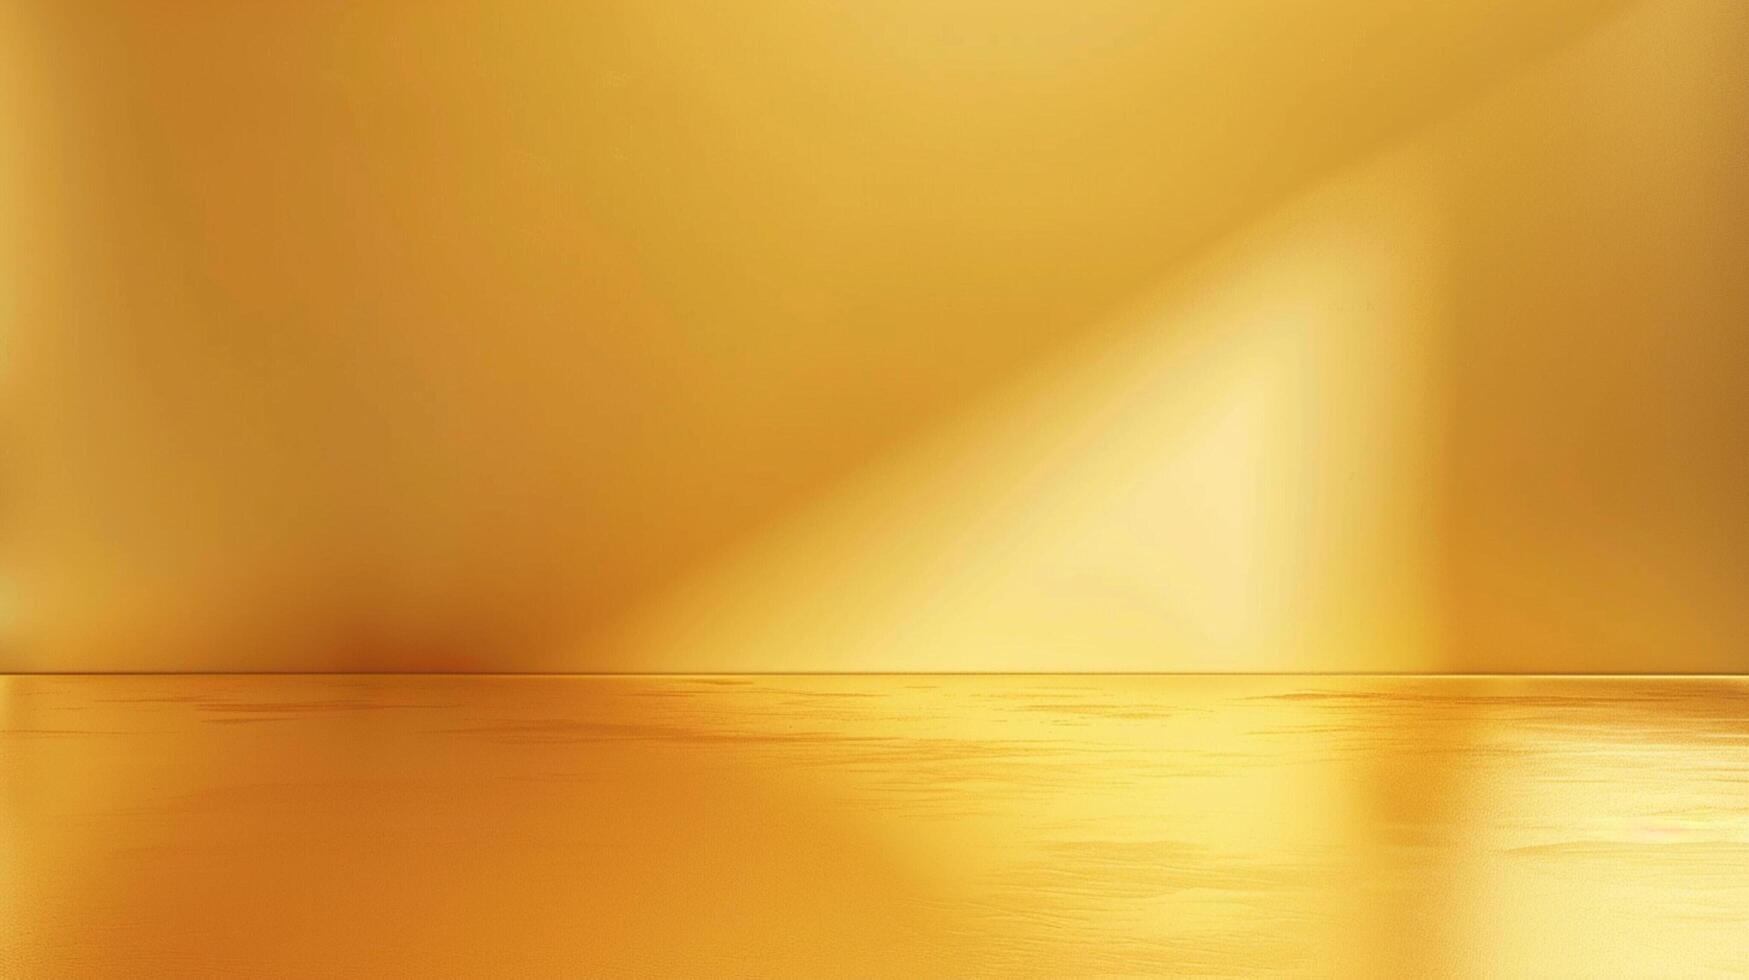 abstract luxury gold yellow gradient studio wall photo